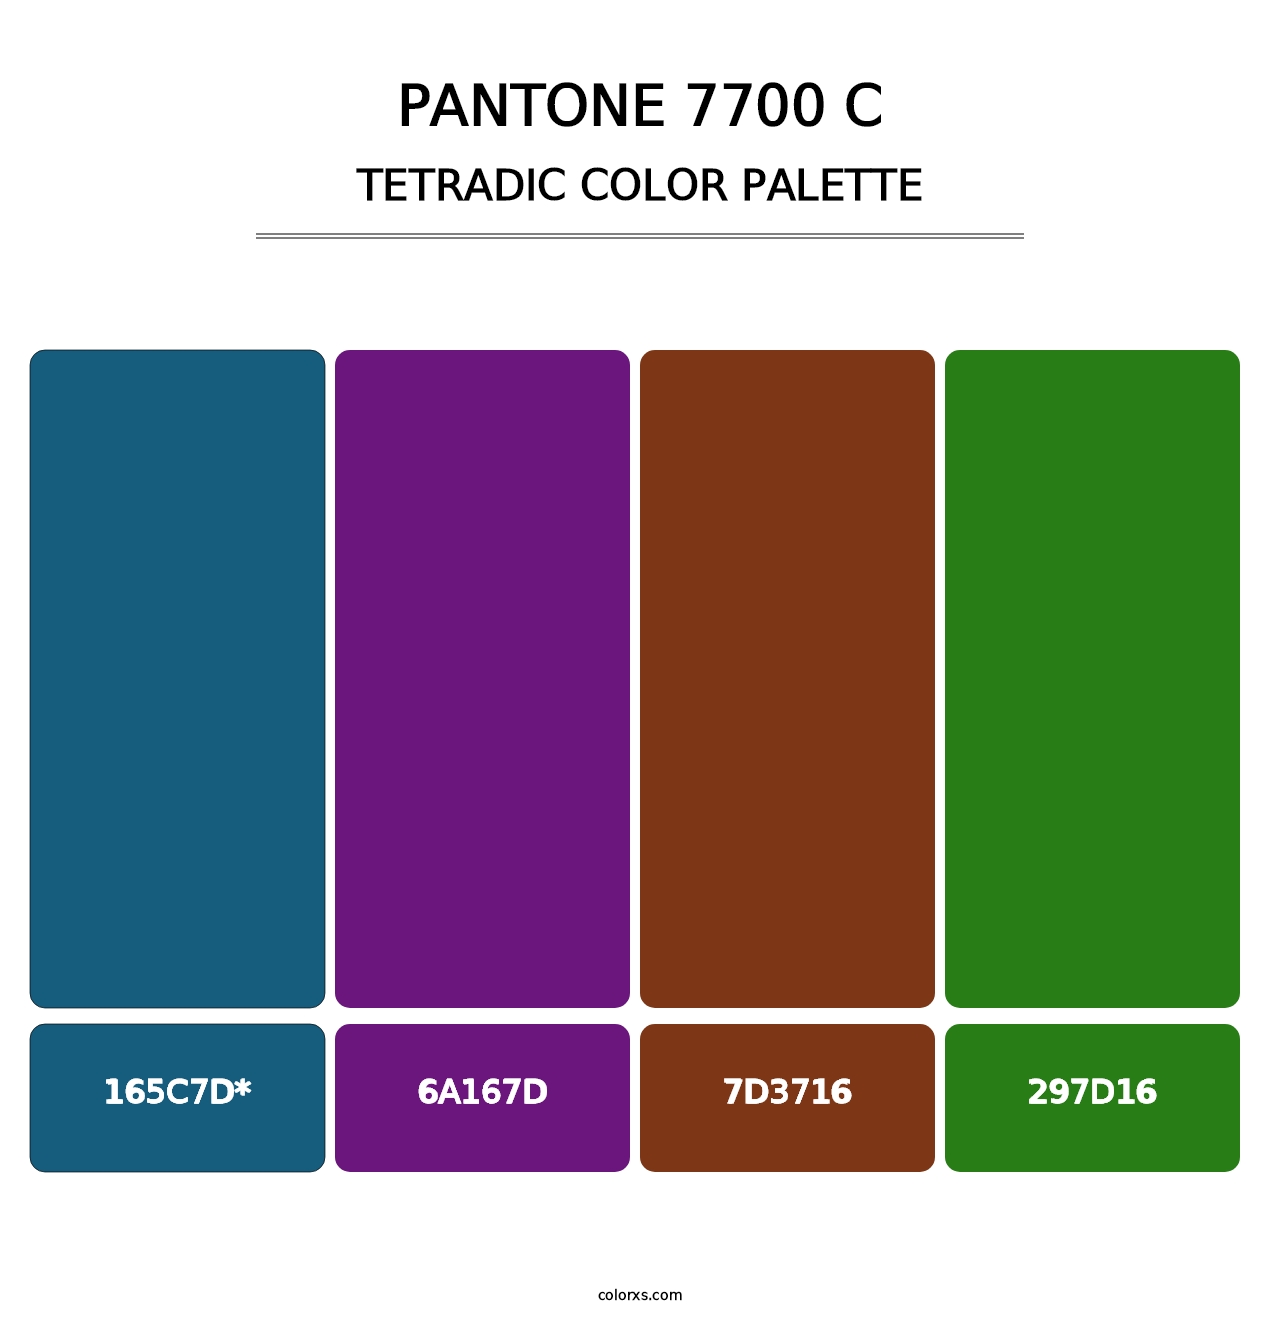 PANTONE 7700 C - Tetradic Color Palette